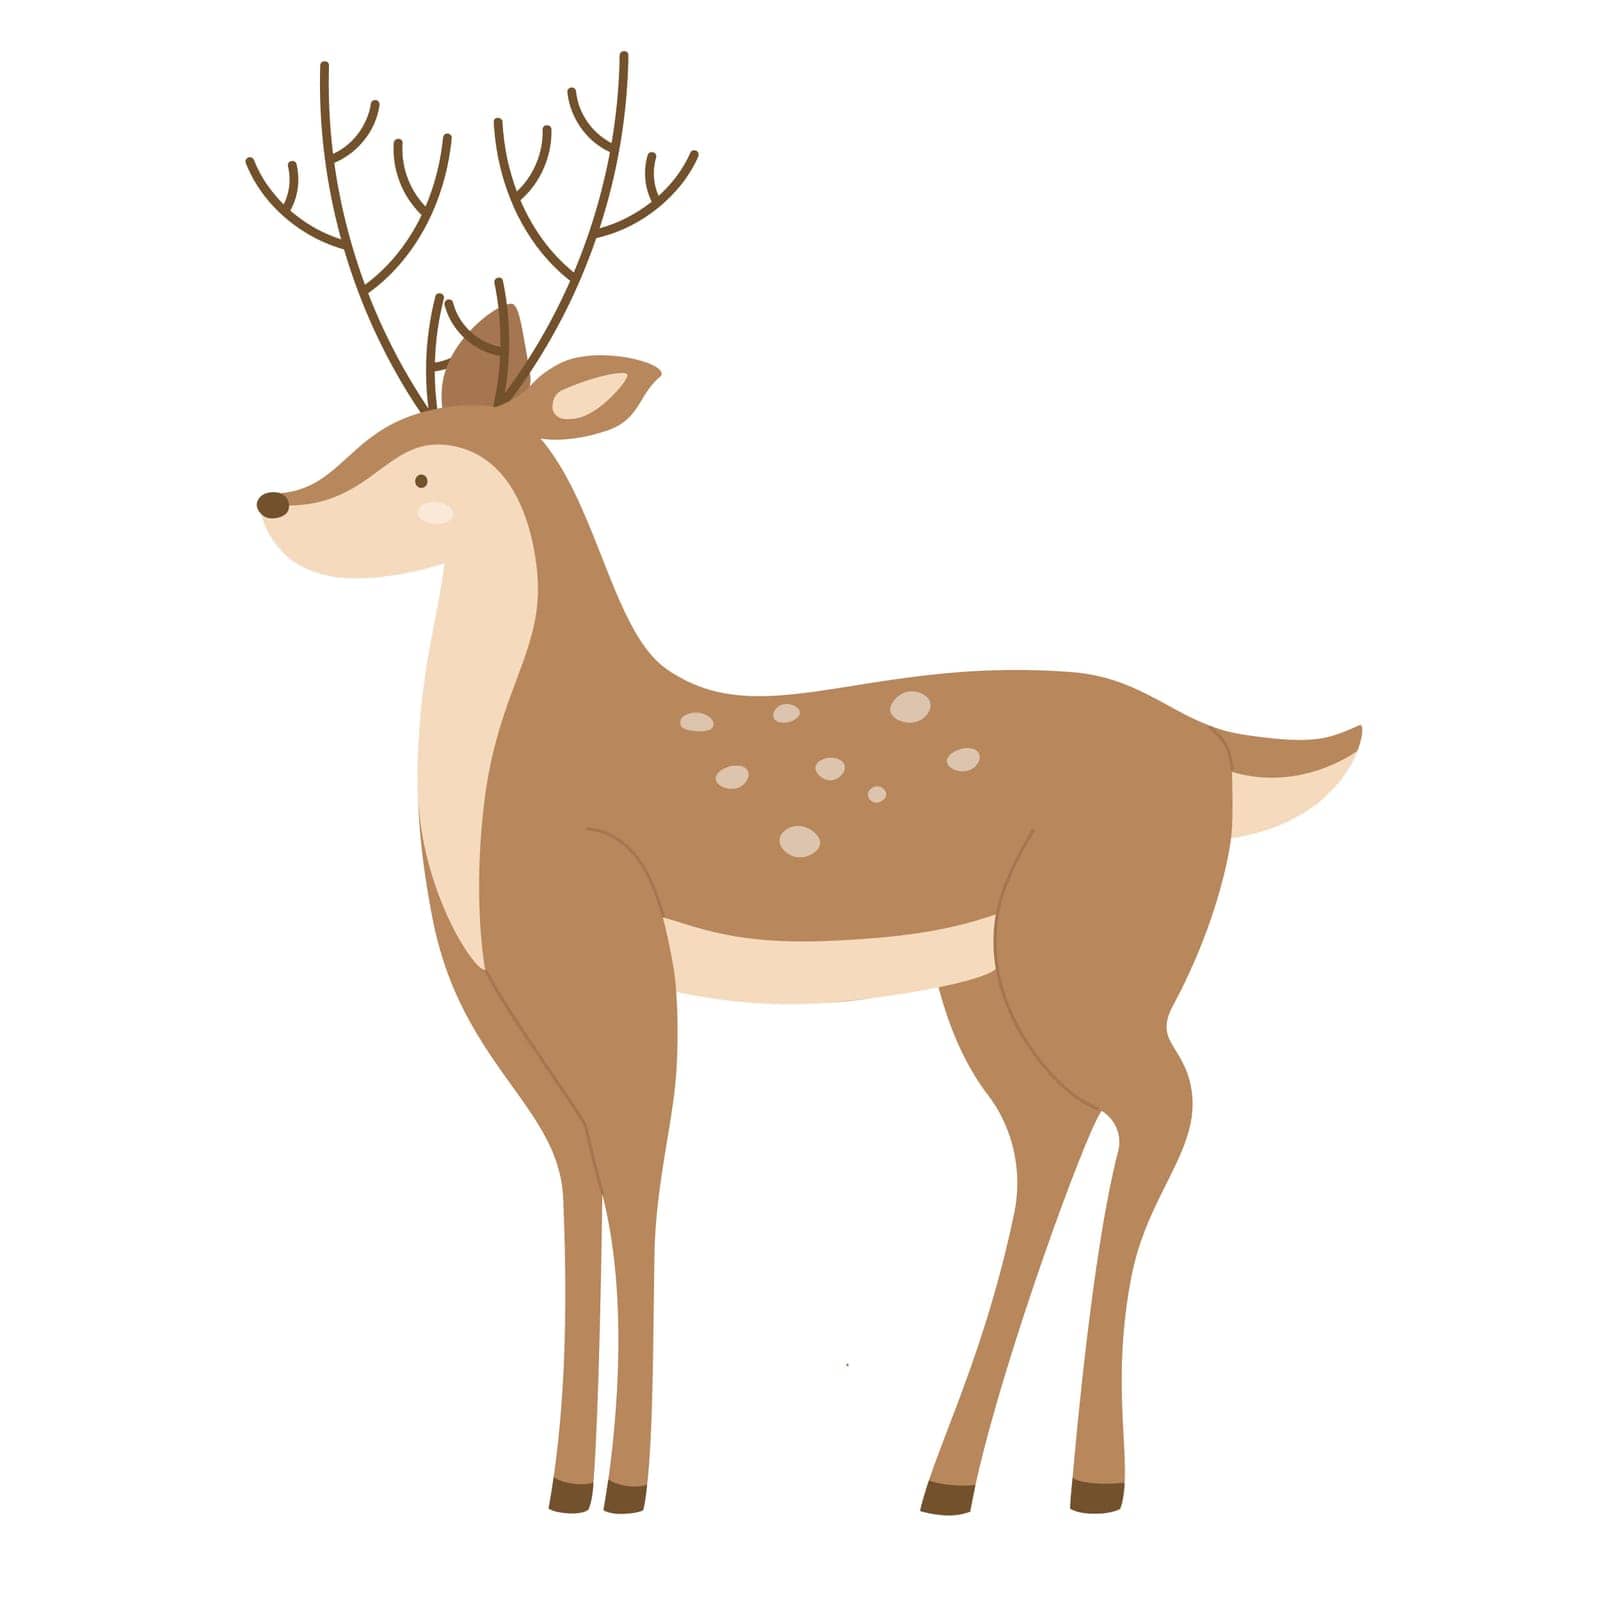 Wildlife deer animal. Wild forest fauna, hoofed ruminant, fallow deer vector illustration